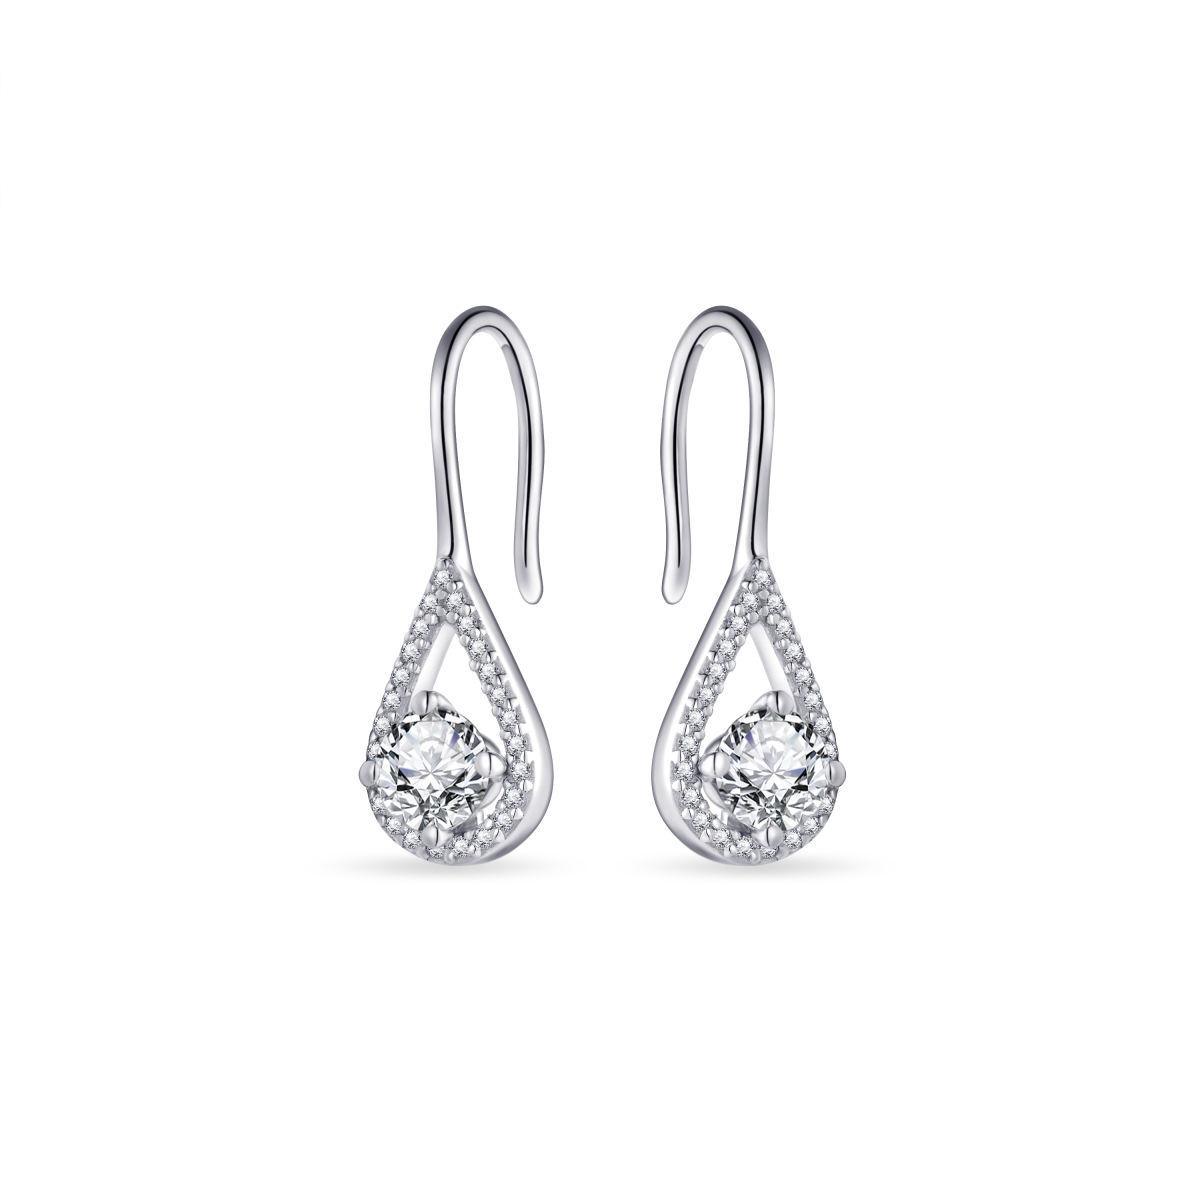 Silver Pear Hook Earrings with Cubic Zirconia - Rococo Jewellery